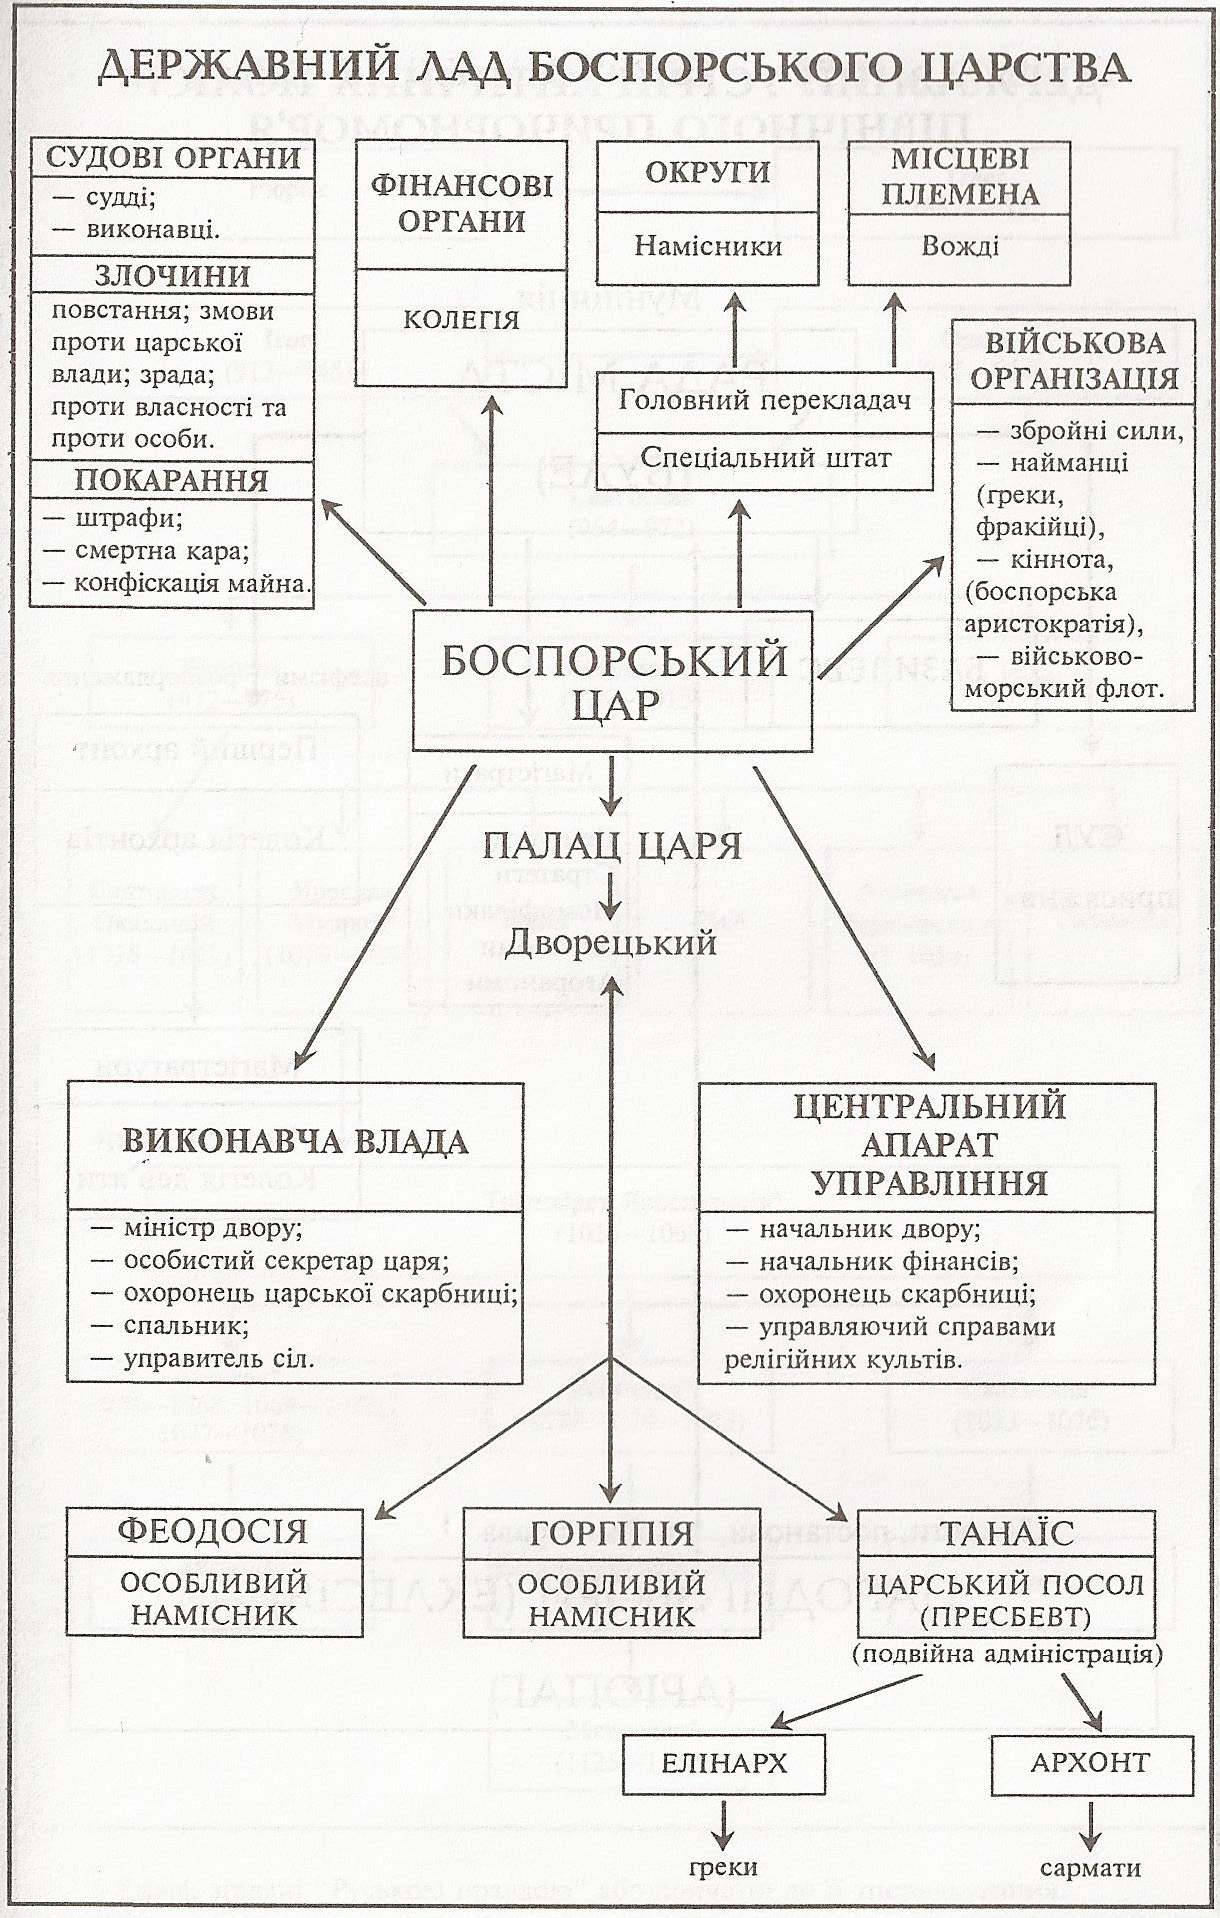 Таблица: Государственный строй Боспорского царства